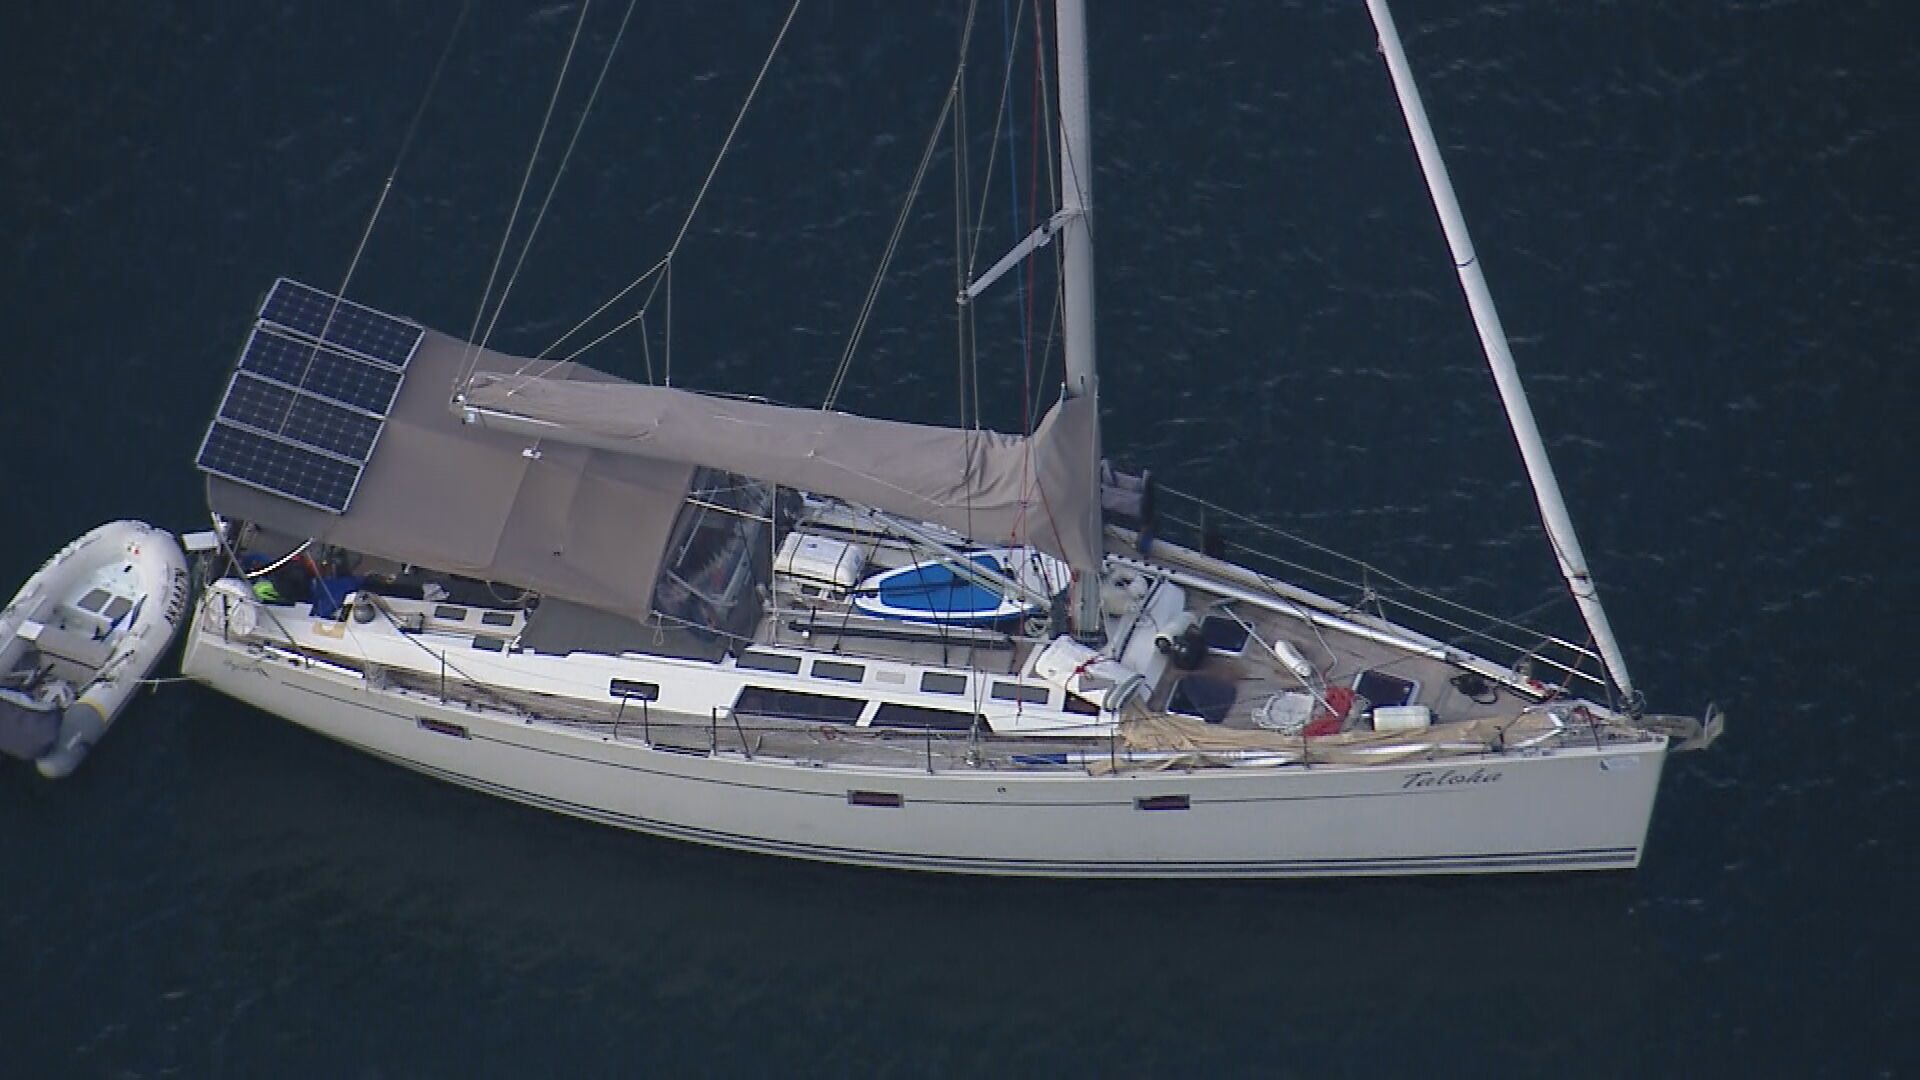 Two bodies found on Sydney yacht